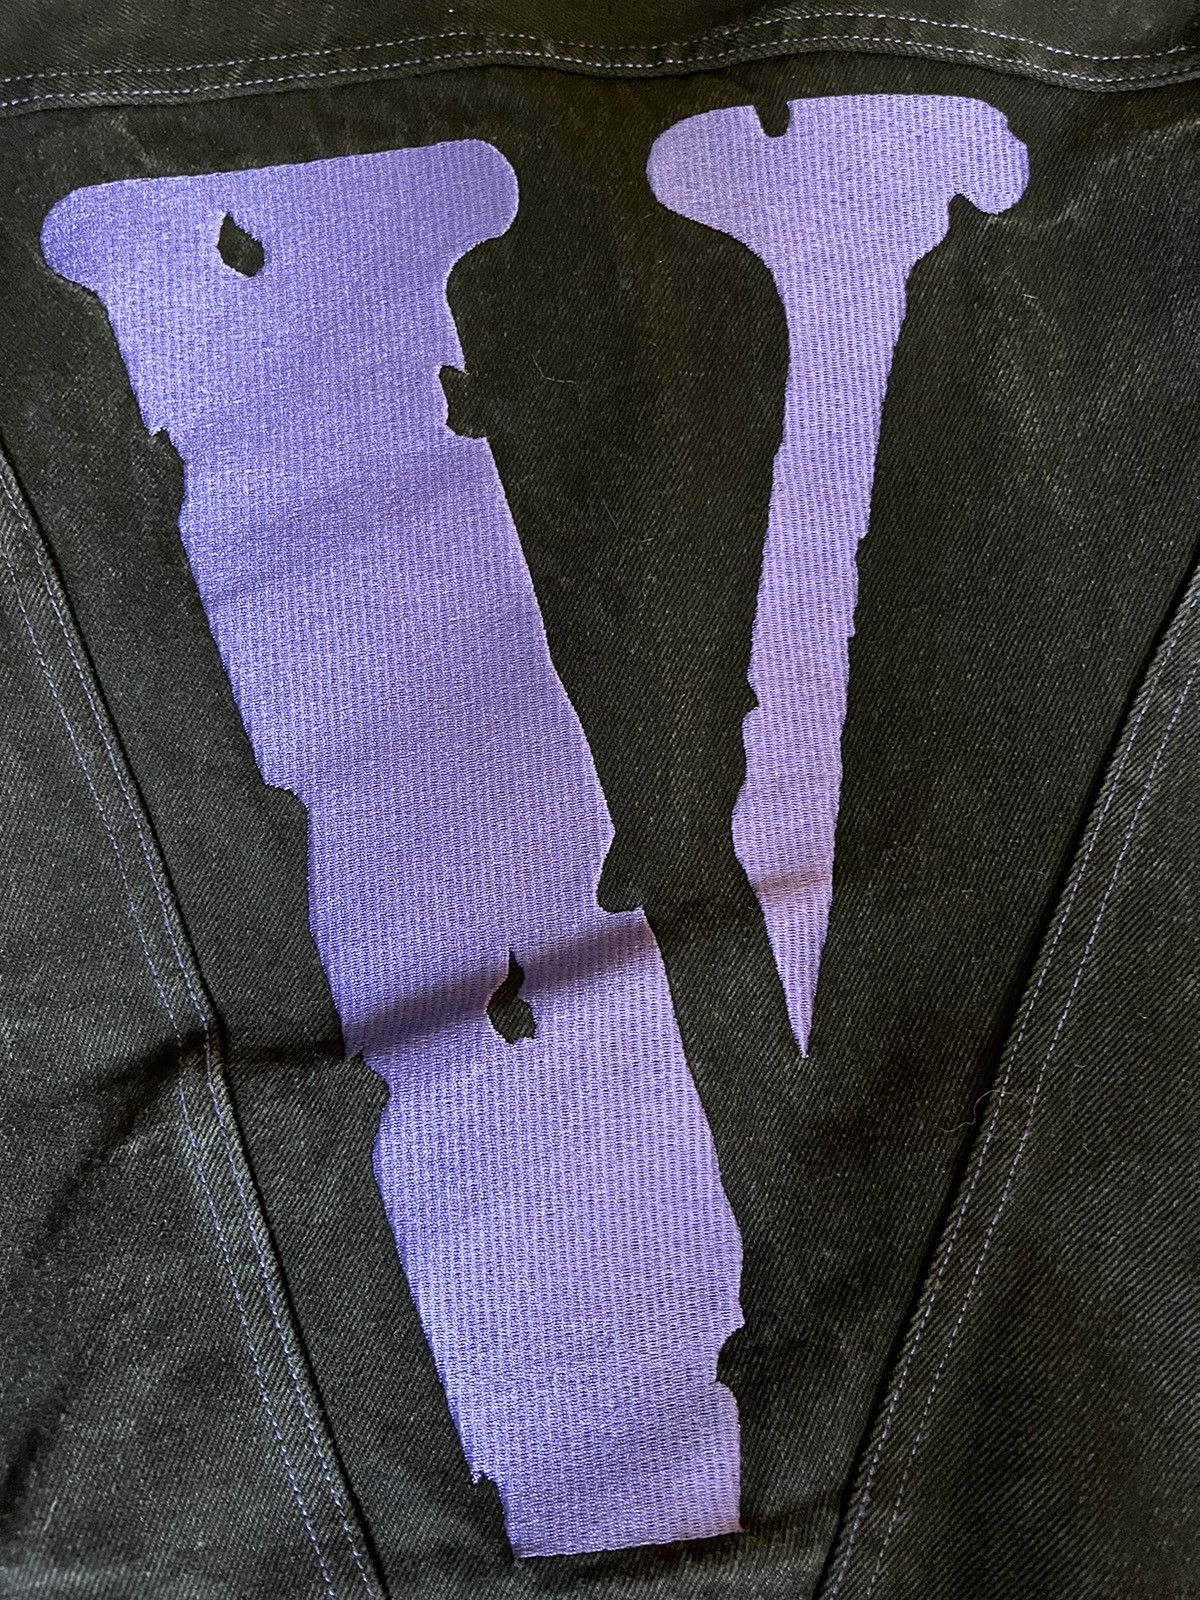 Vlone Vlone friends jacket black/purple 2018 Size US XL / EU 56 / 4 - 4 Thumbnail